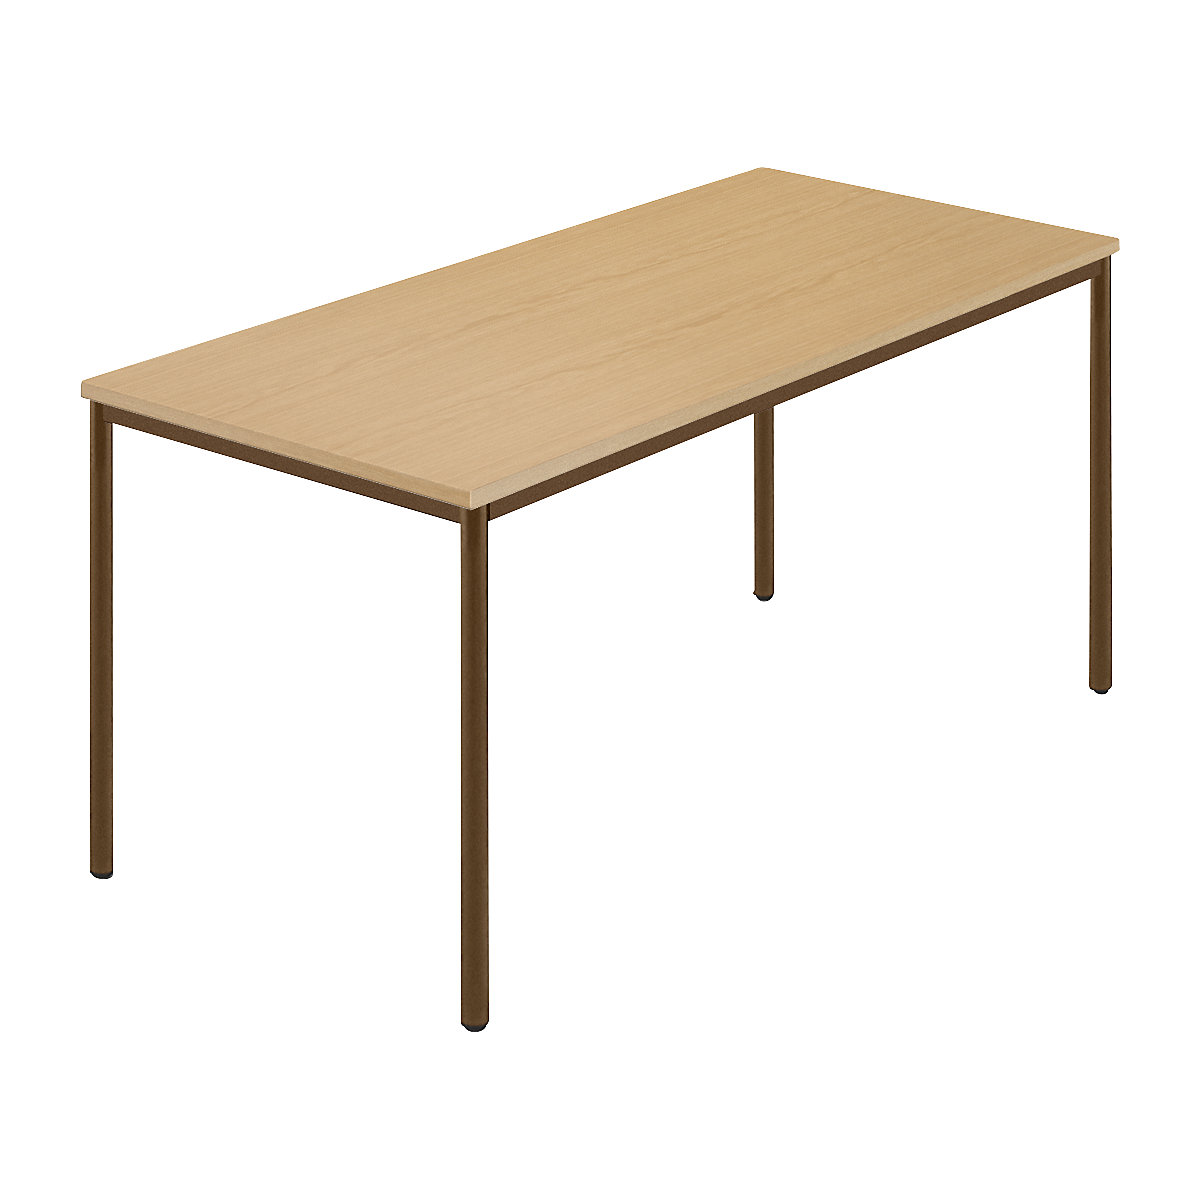 Obdĺžnikový stôl, kruhová rúrka s povrchovou úpravou, š x h 1500 x 800 mm, prírodný buk / hnedá-5